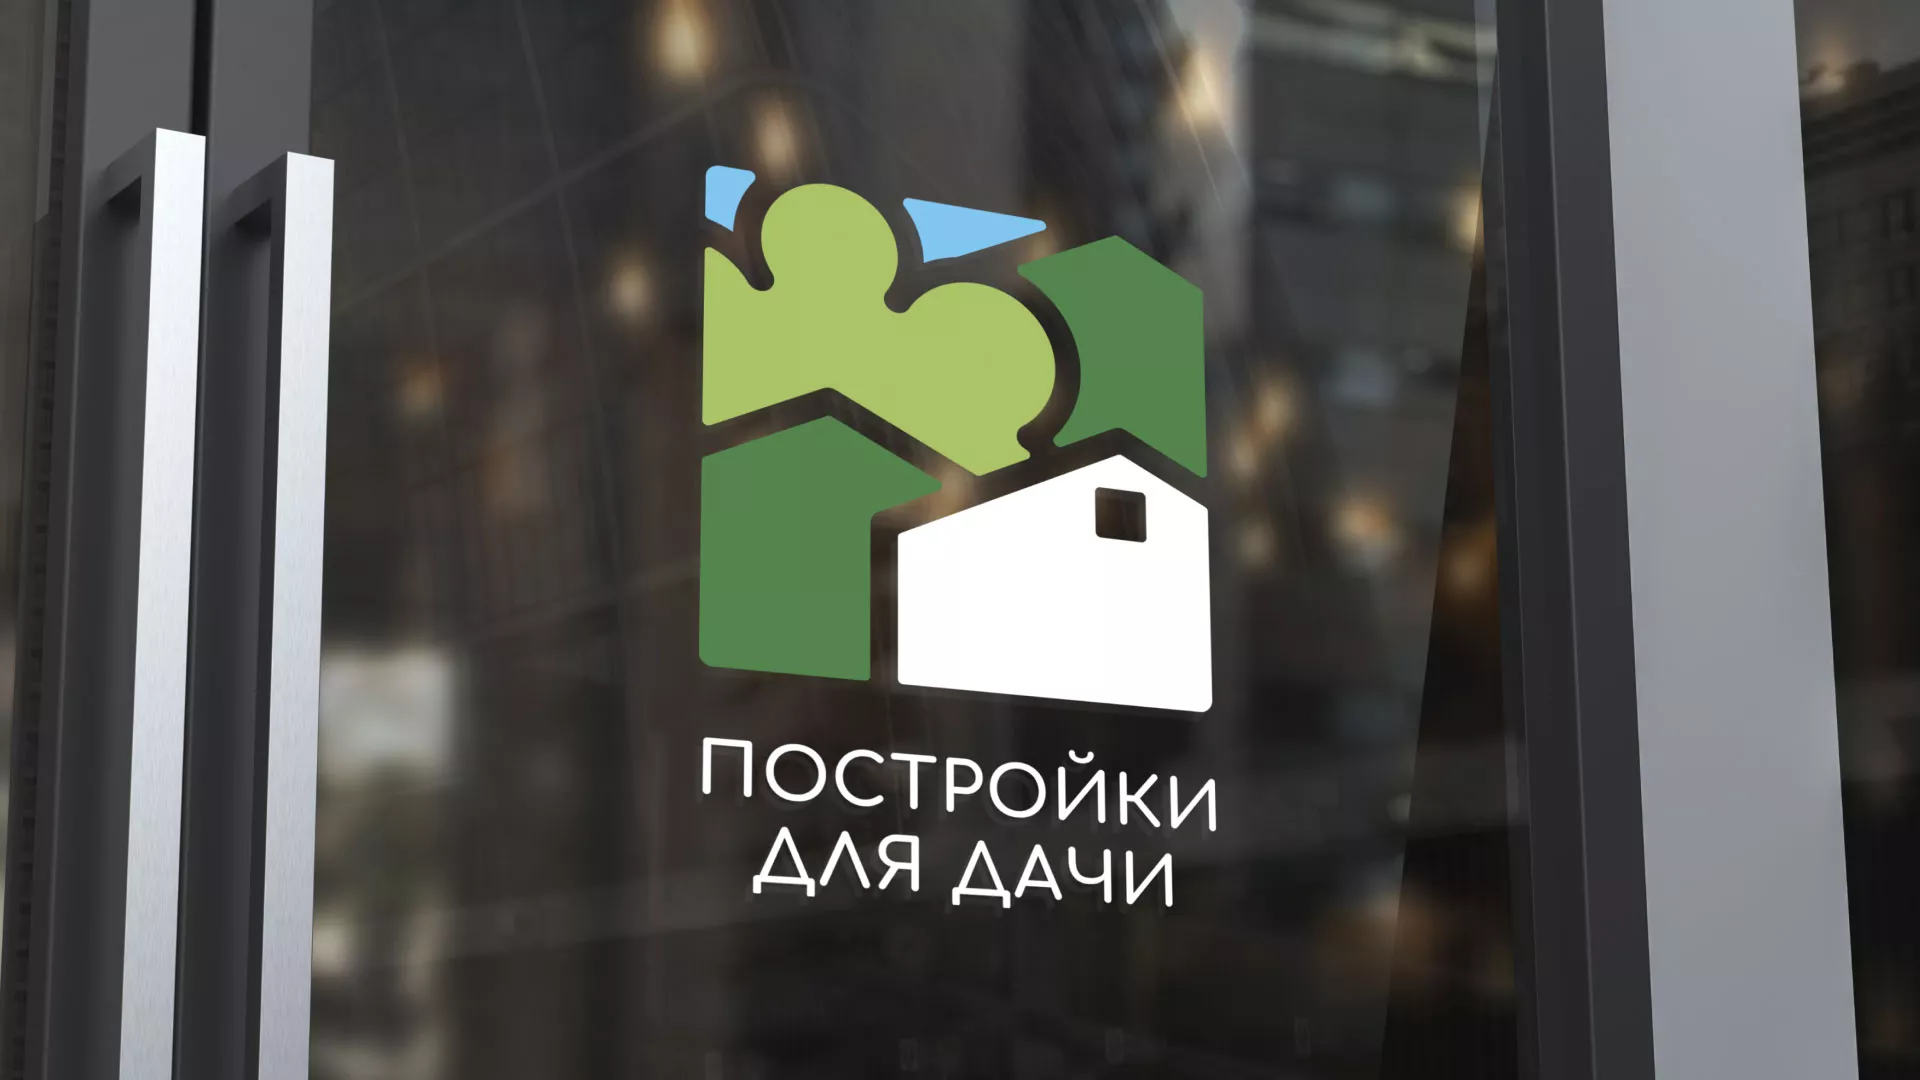 Разработка логотипа в Звенигово для компании «Постройки для дачи»